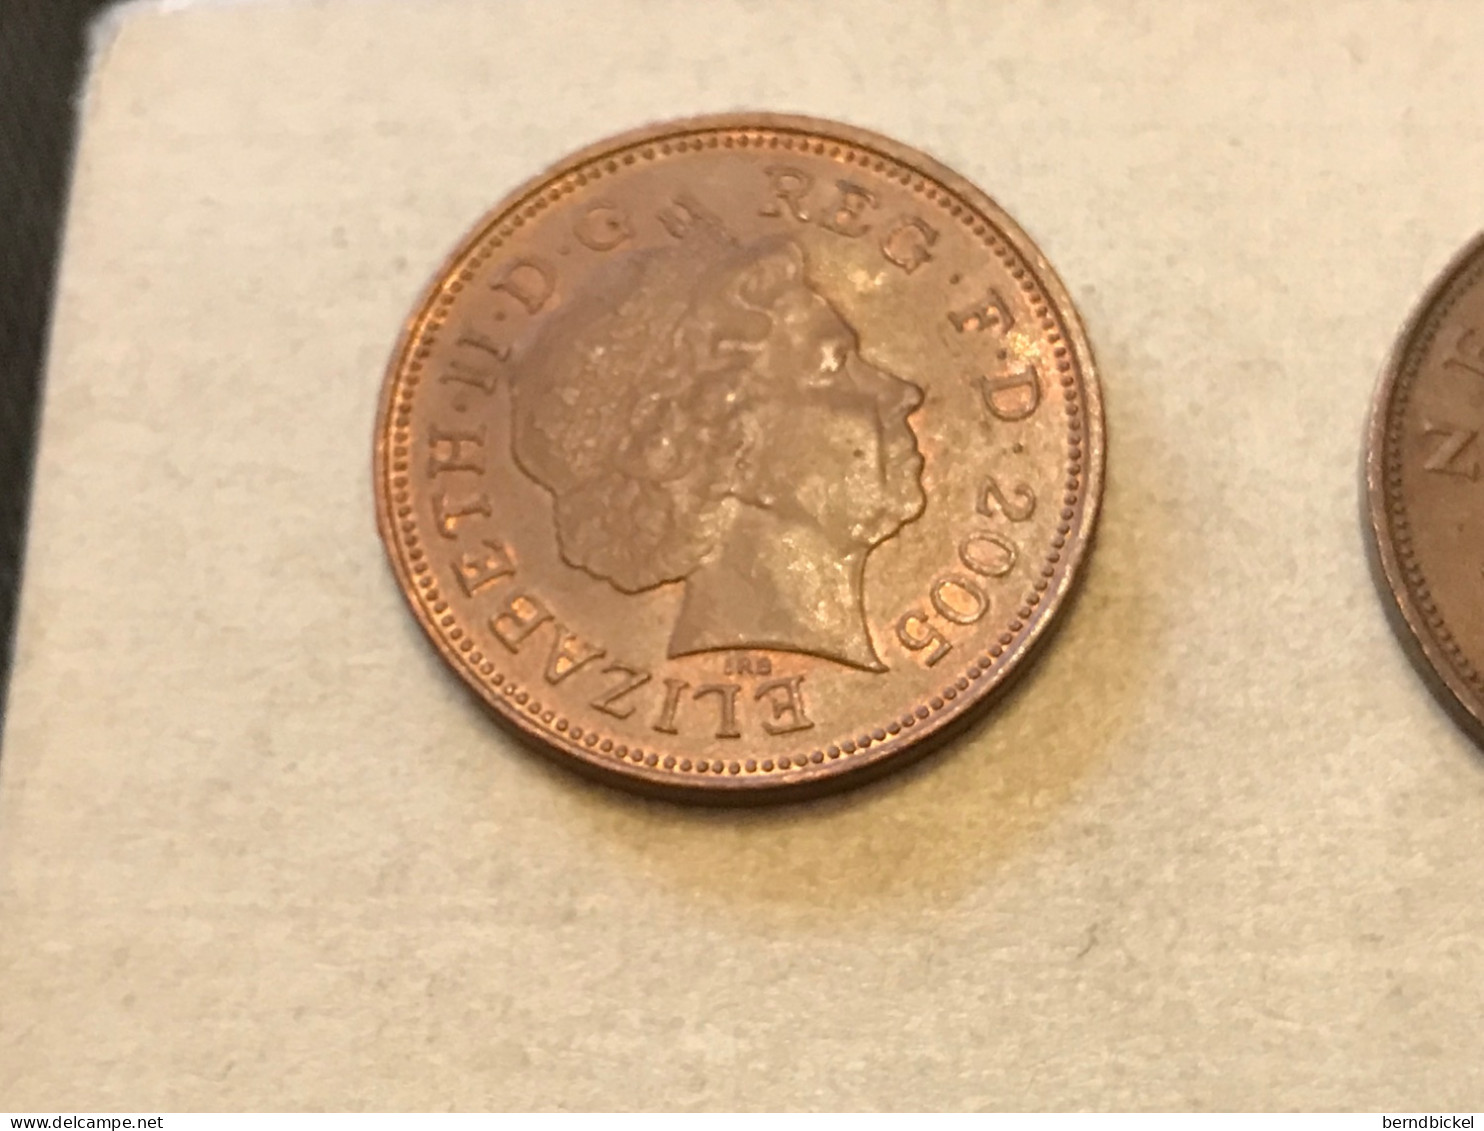 Münze Münzen Umlaufmünze Großbritannien 2 Pence 2005 - 2 Pence & 2 New Pence